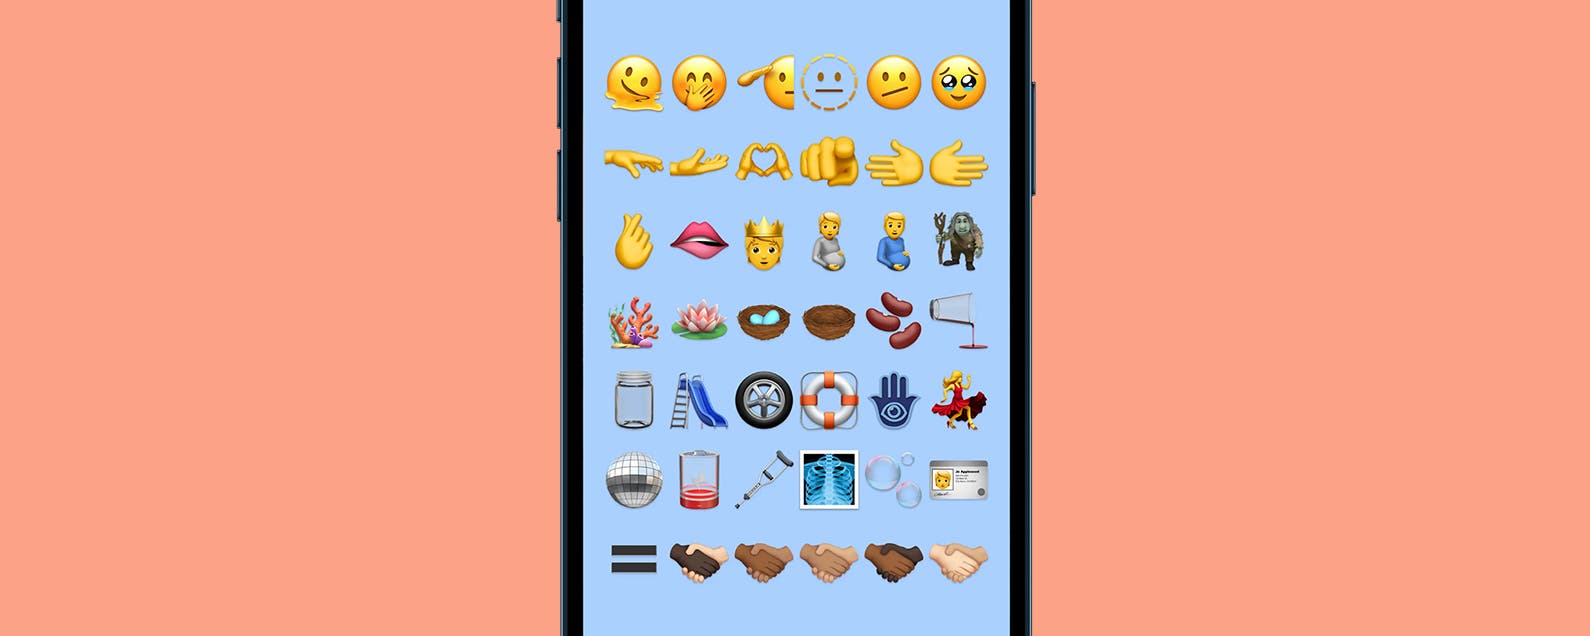 iphone emojis 2022